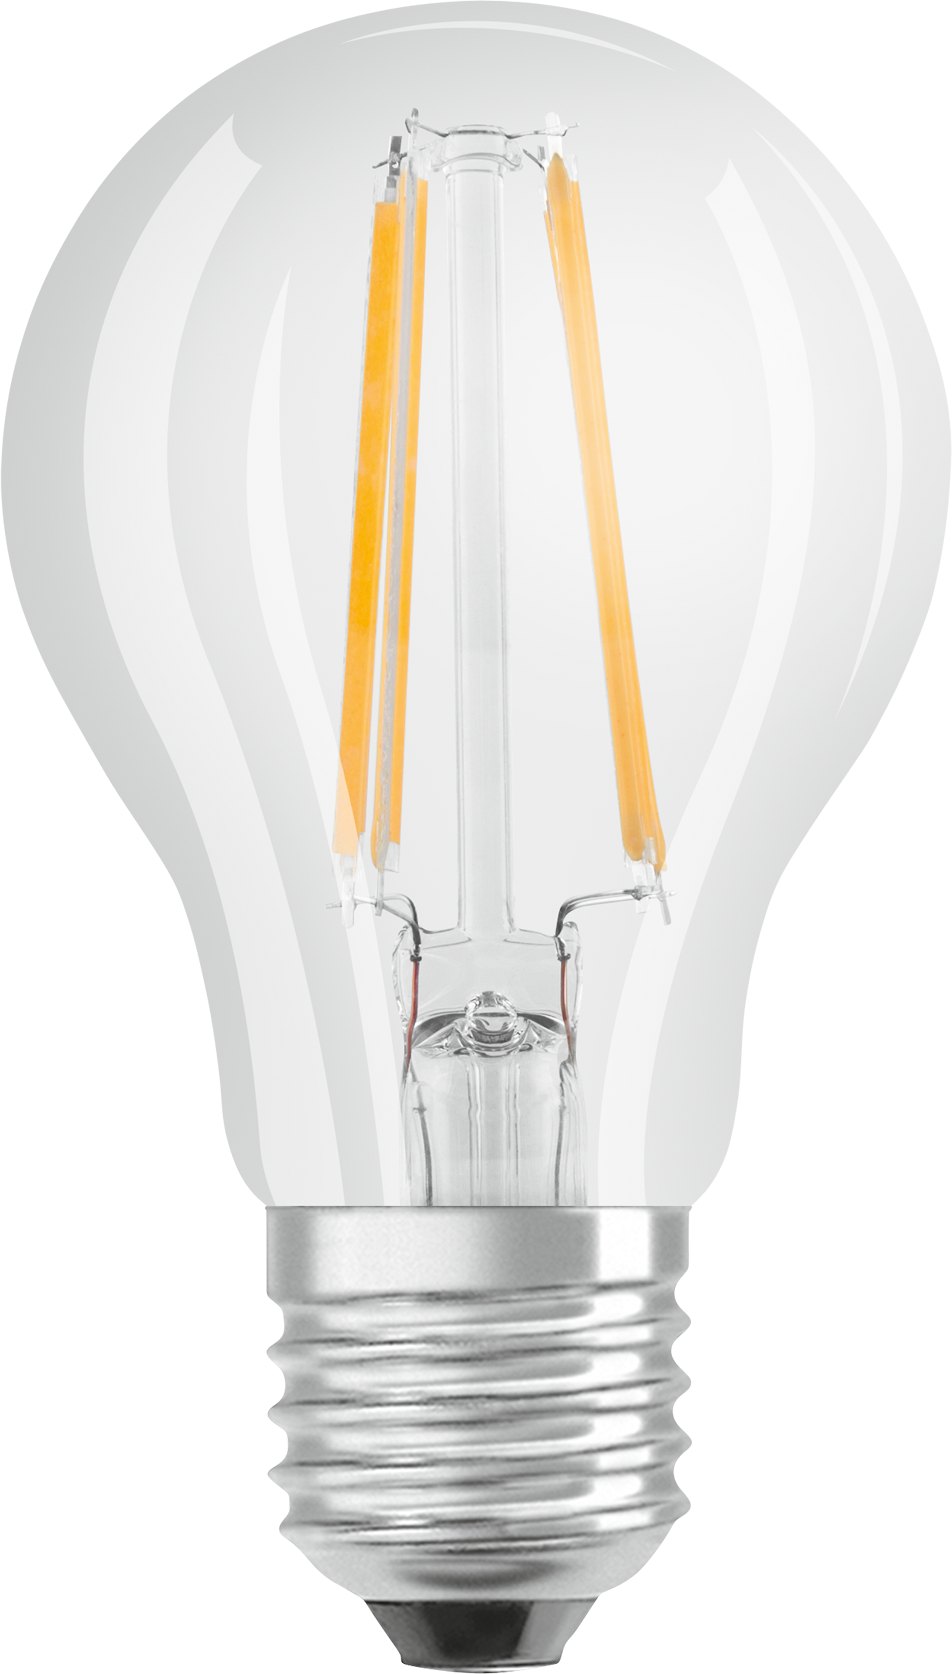 OSRAM LED-Lampe Retrofit Star Classic A E27, 4.0W, 470lm, warmweiss - Lampen, Leuchten